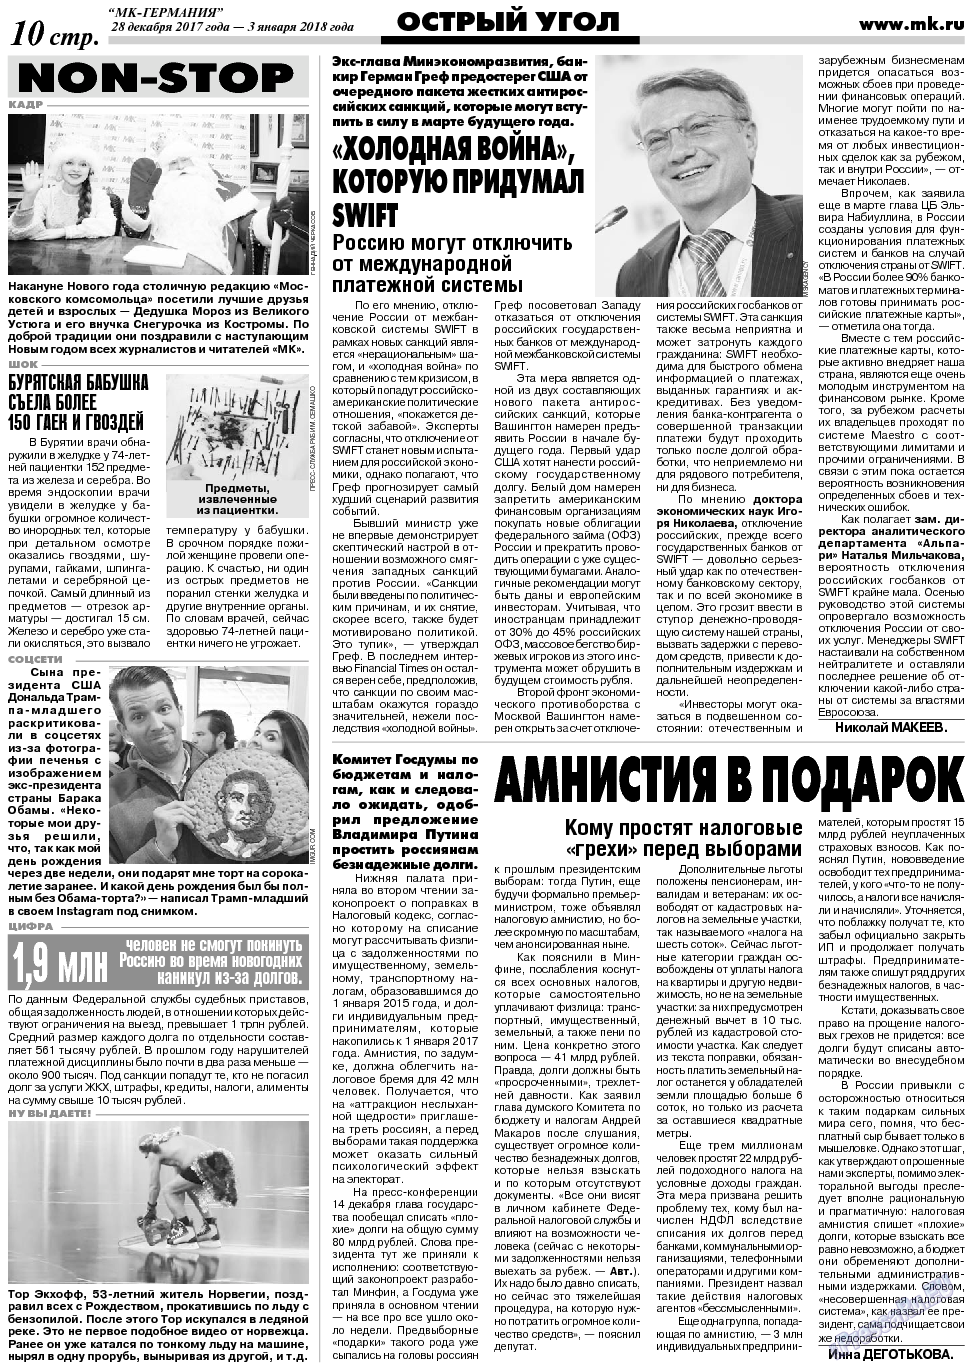 МК-Германия, газета. 2018 №1 стр.10